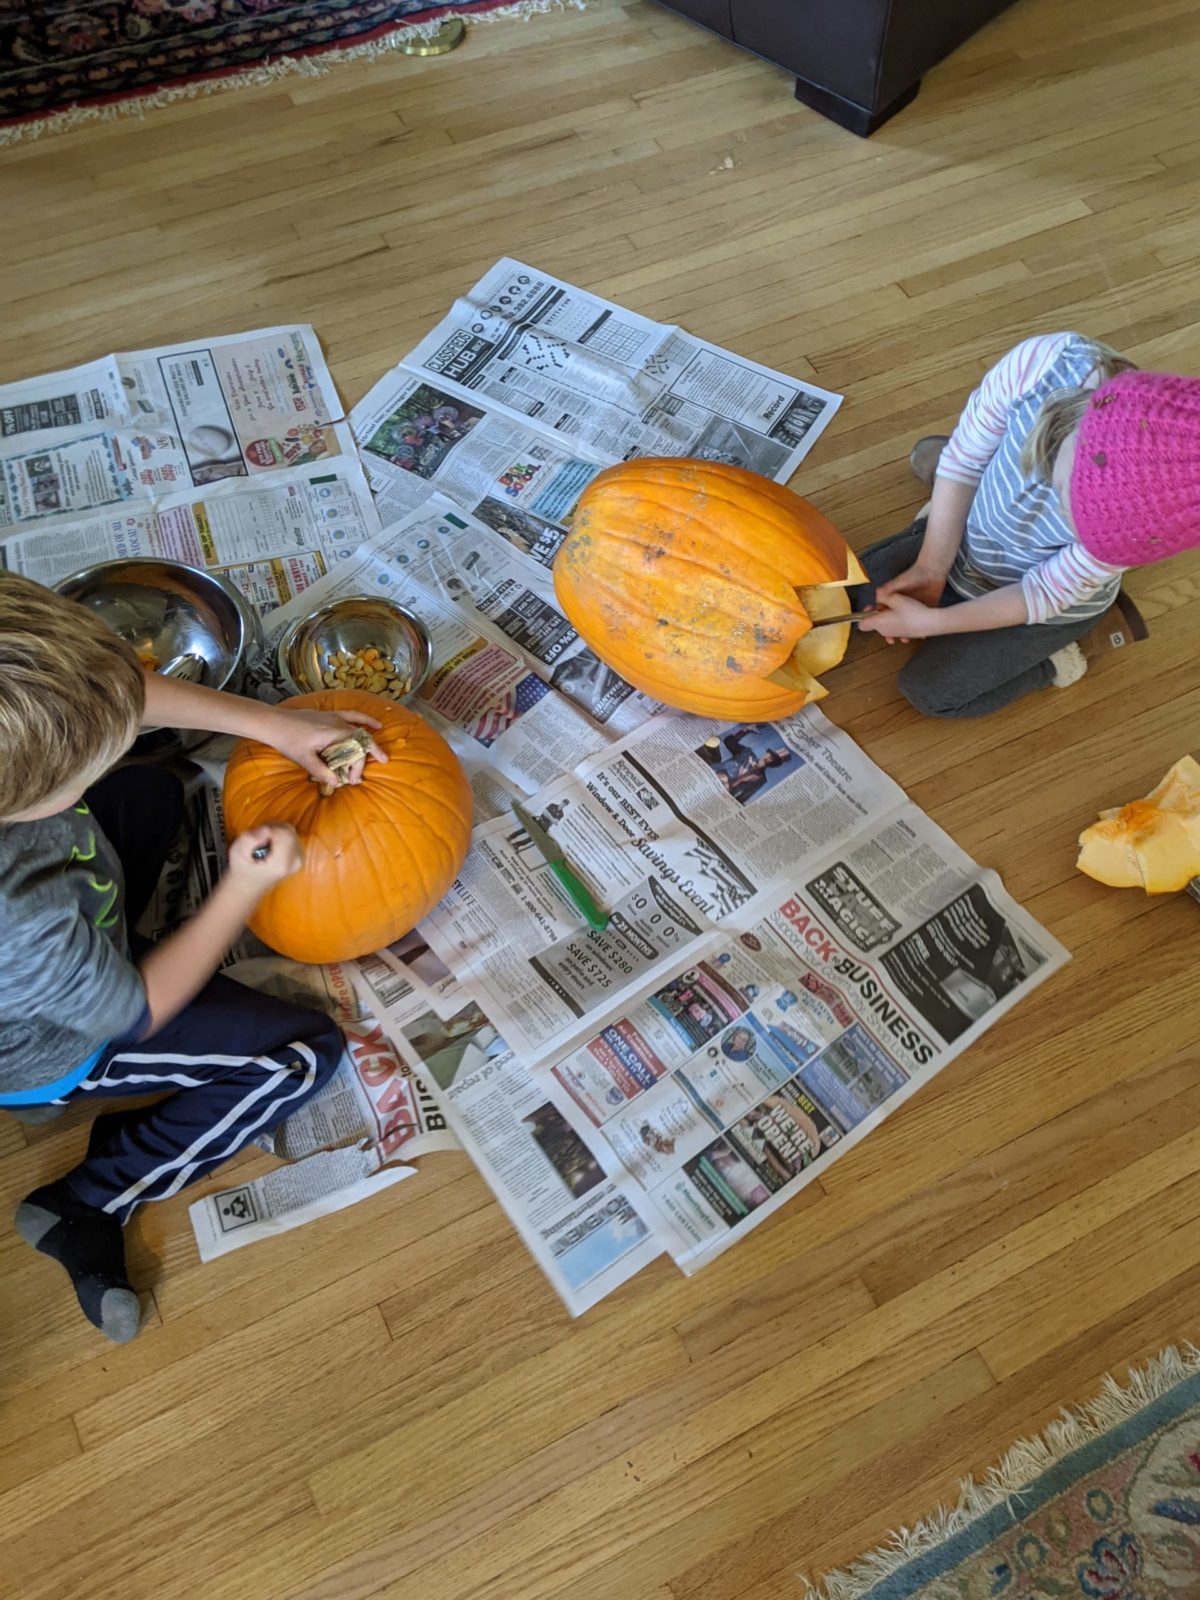 Kids carving pumpkins on newspaper on the floor.